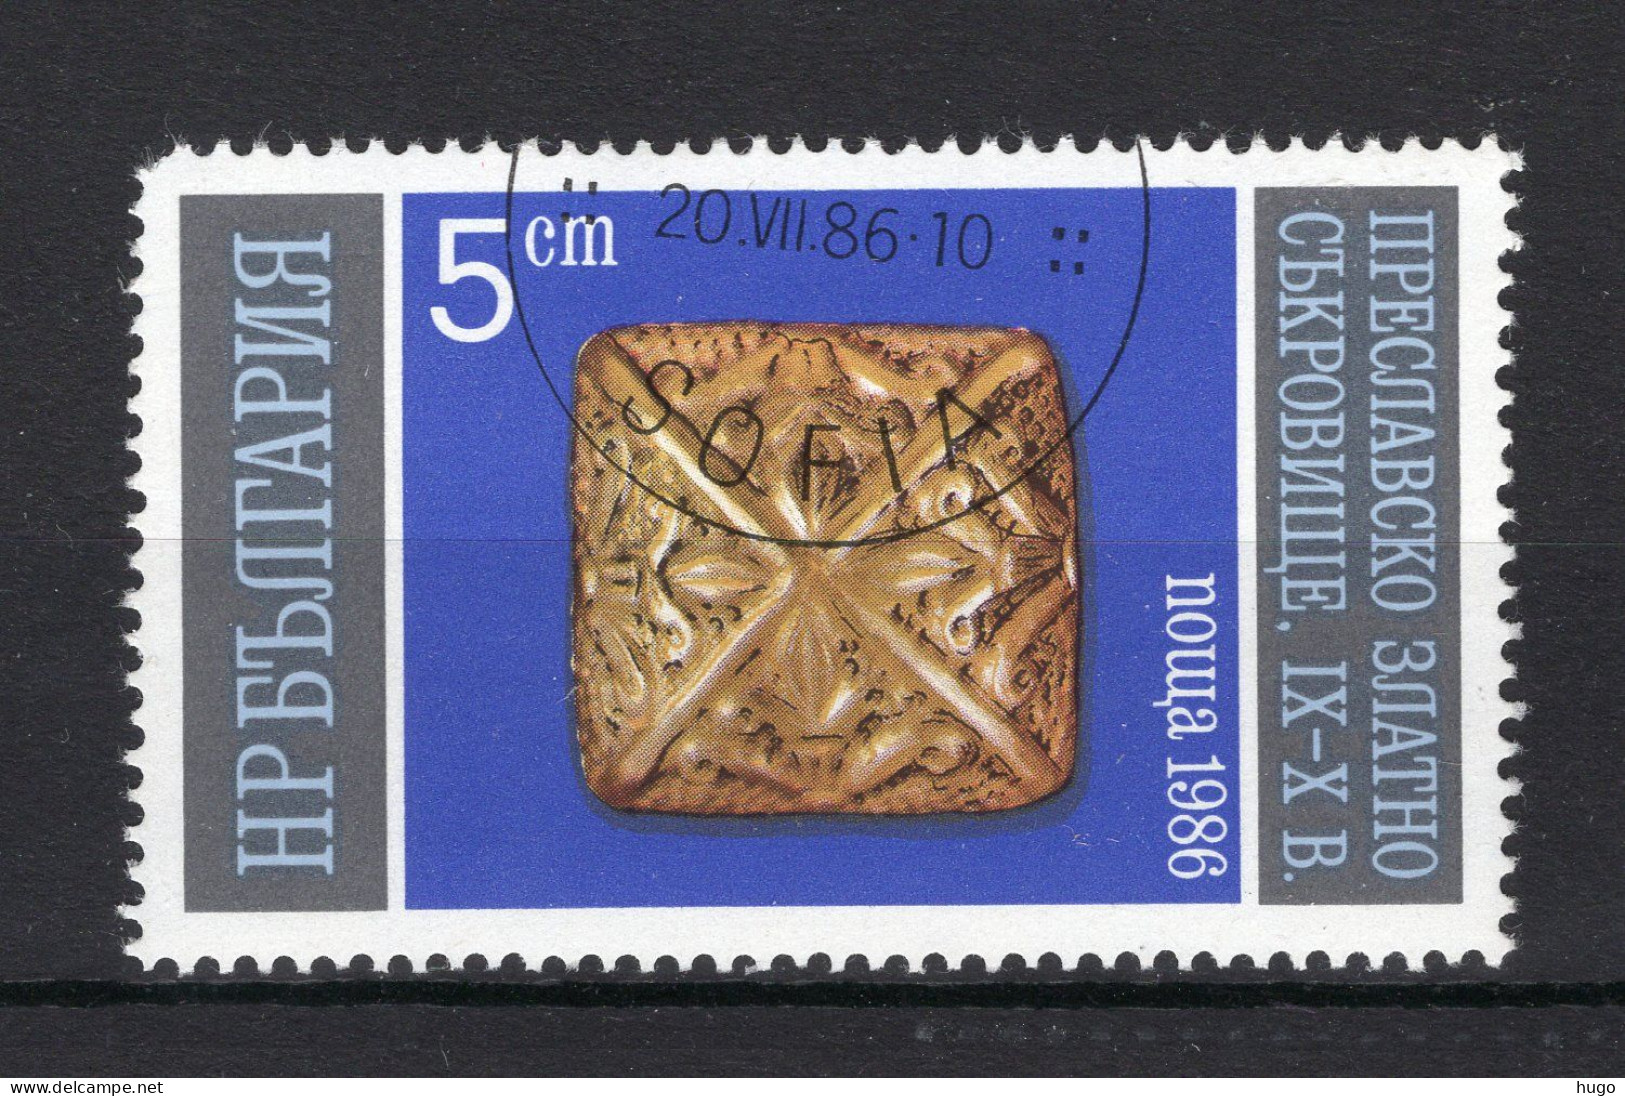 BULGARIJE Yt. 3017° Gestempeld 1986 - Used Stamps